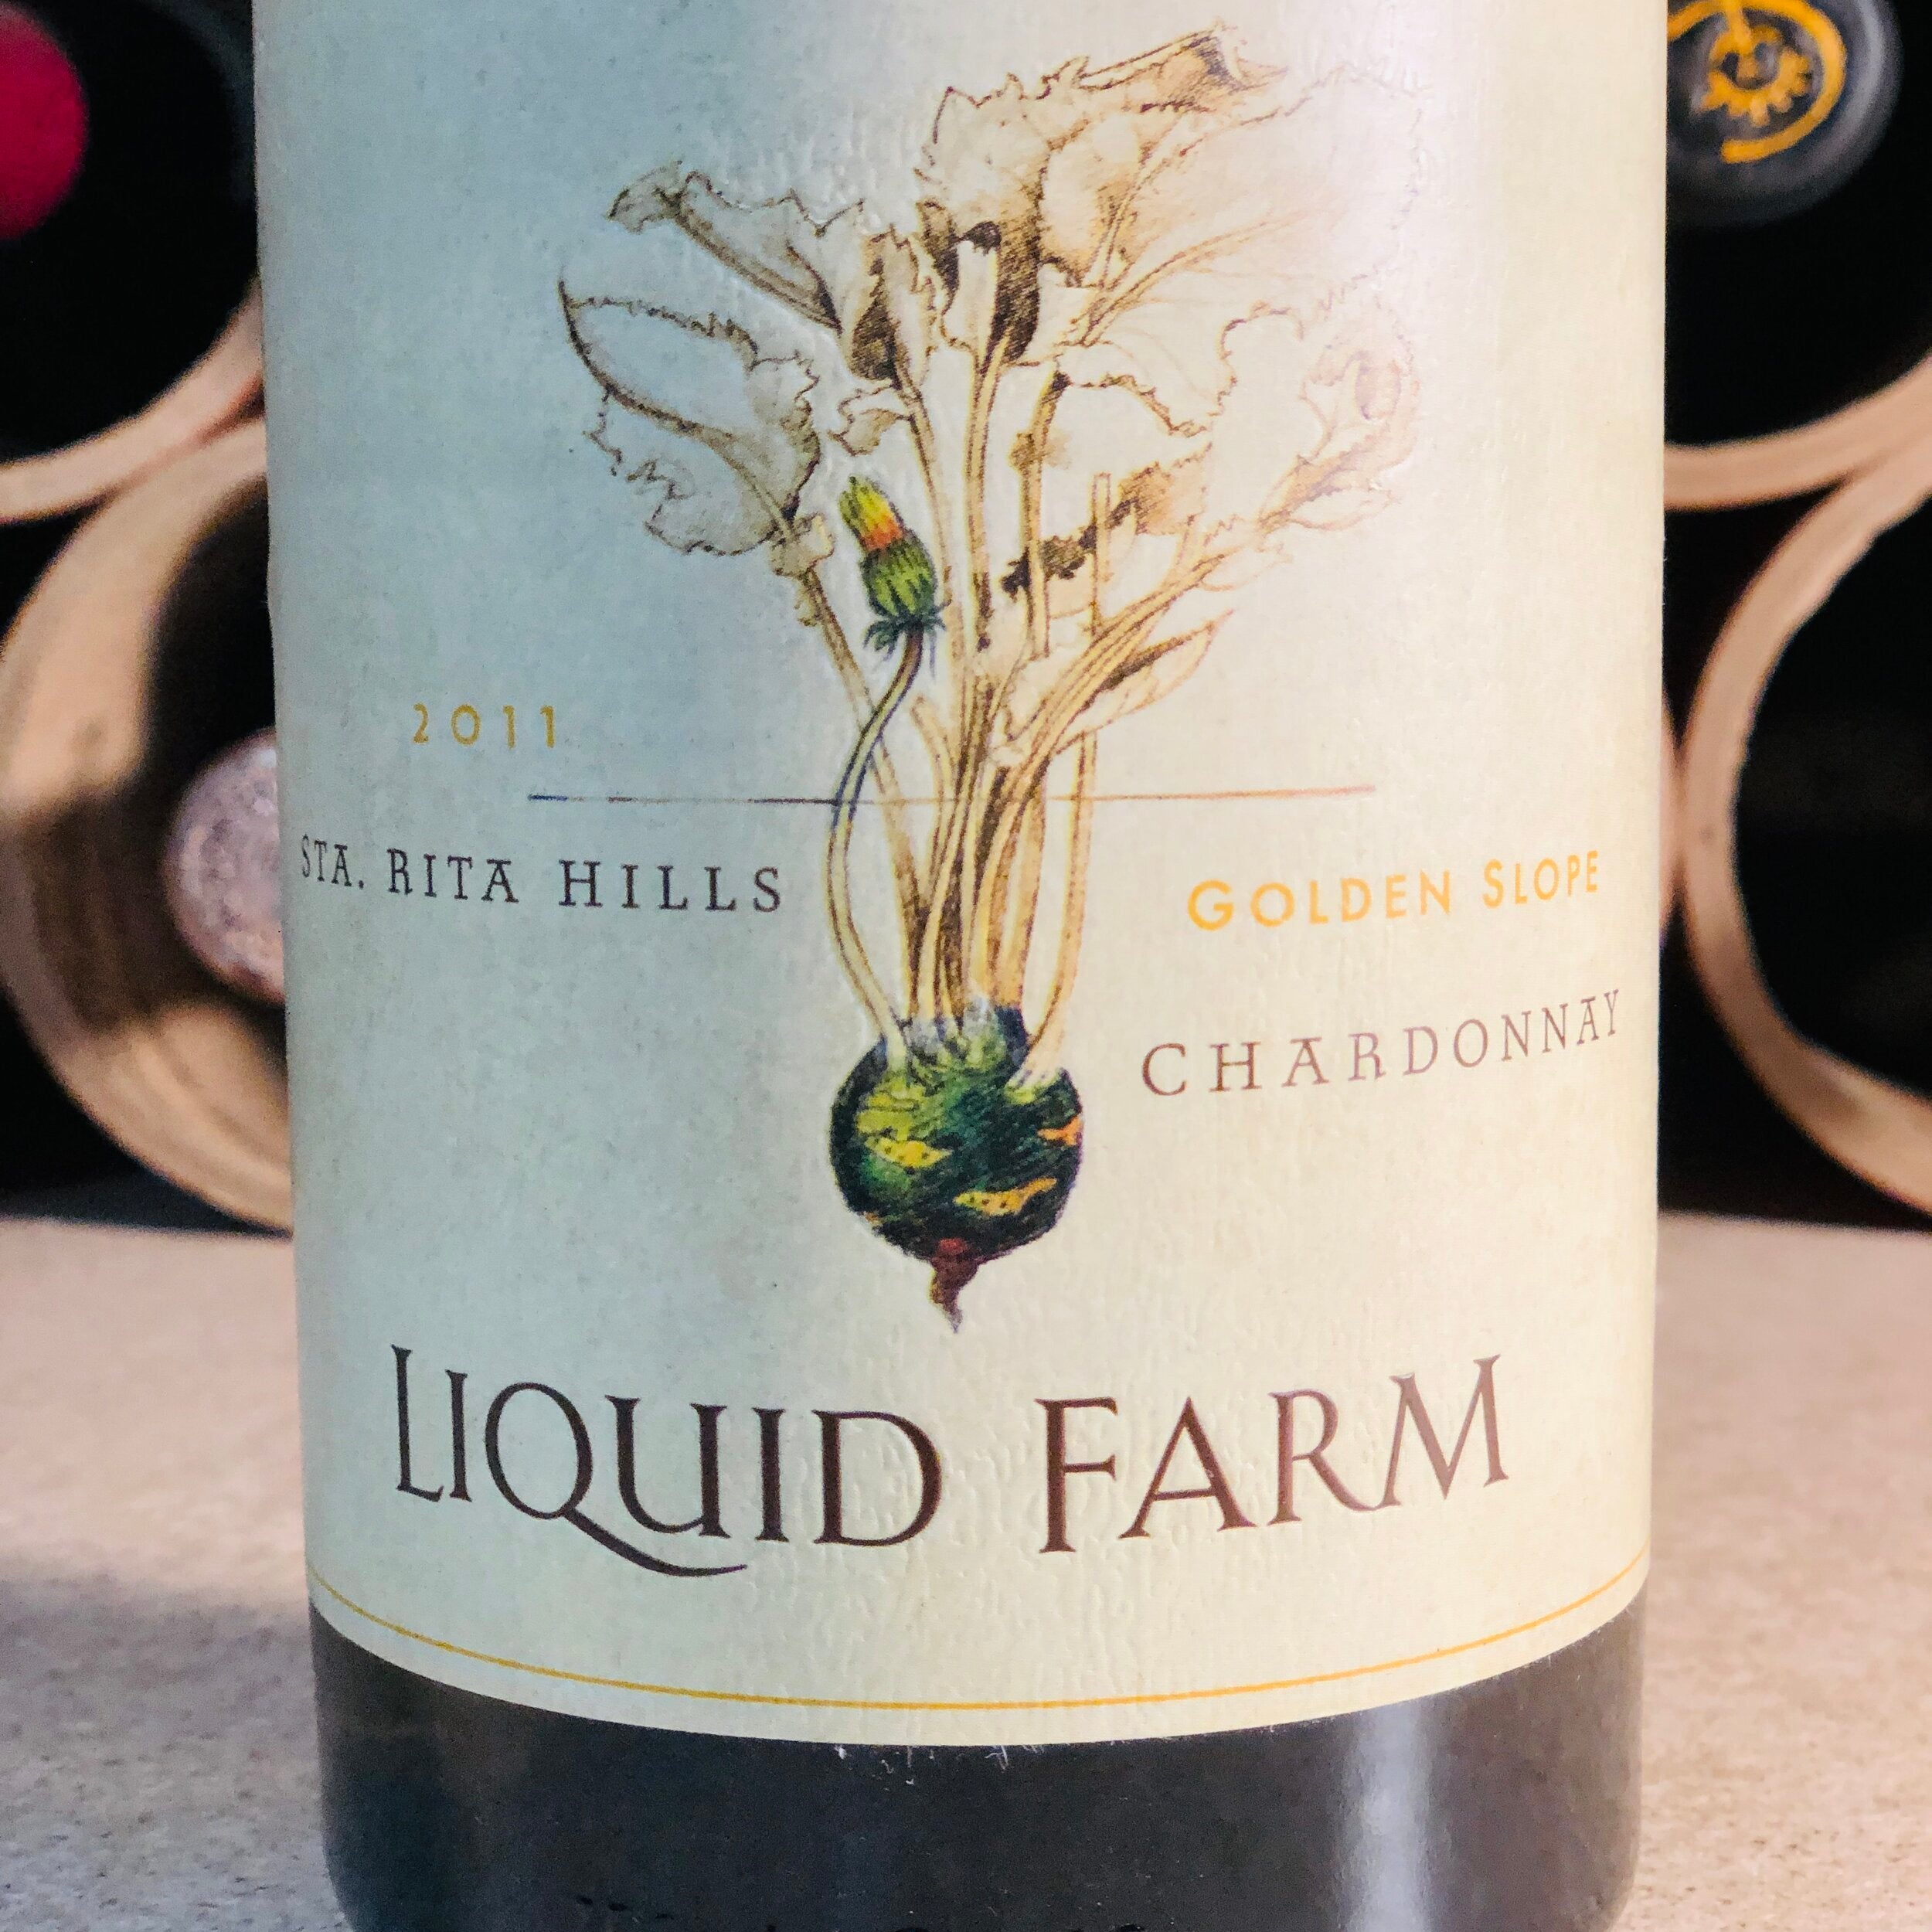 Liquid Farm, Santa Maria Valley, Golden Slope Chardonnay 2011